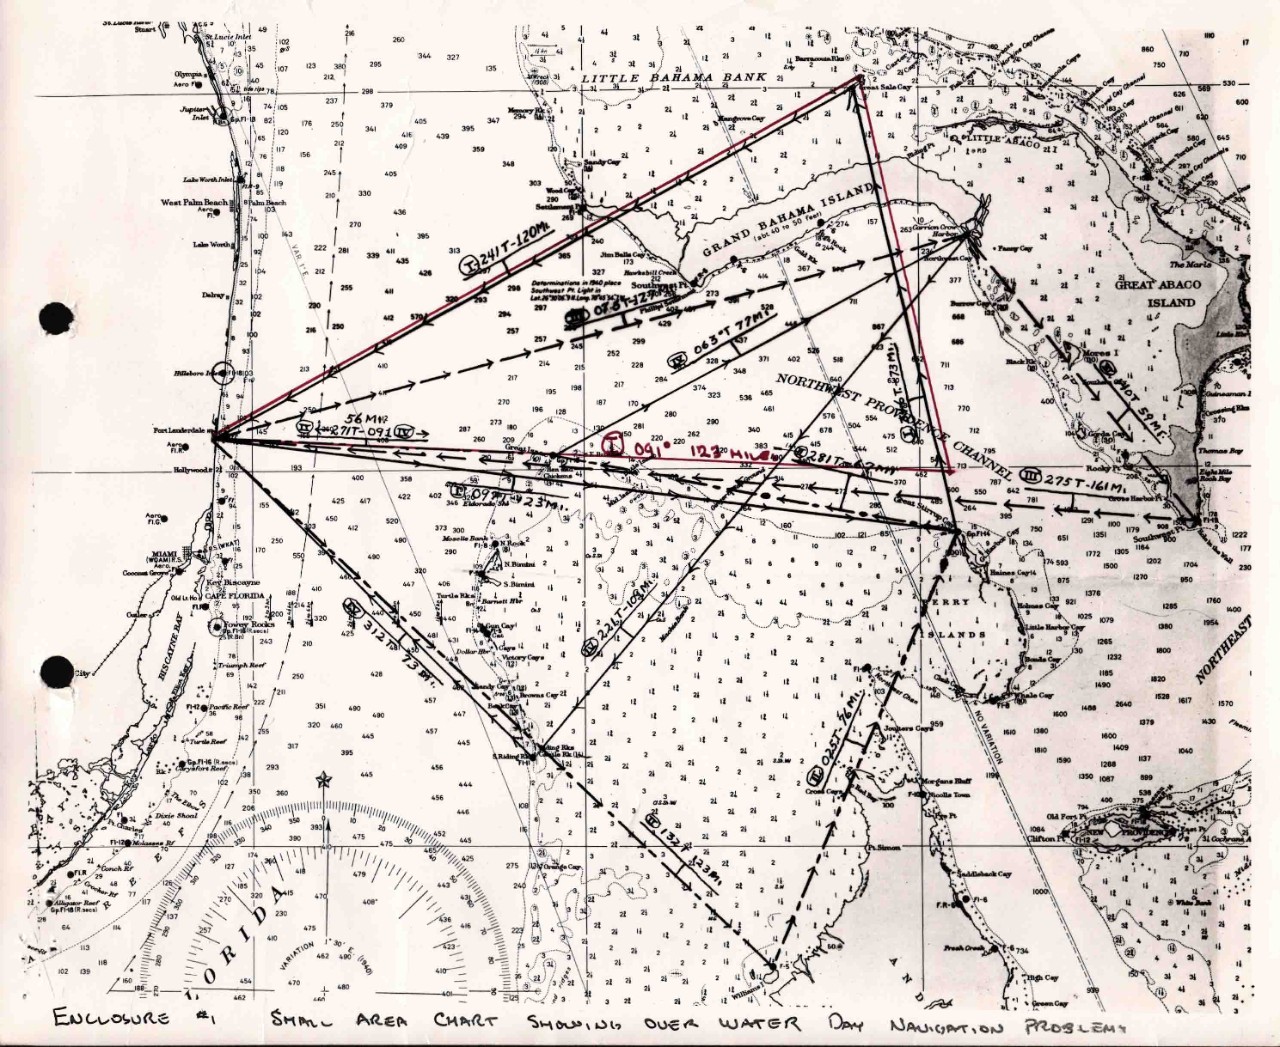 Map of Navigation Problem No. 1 for Flight 19